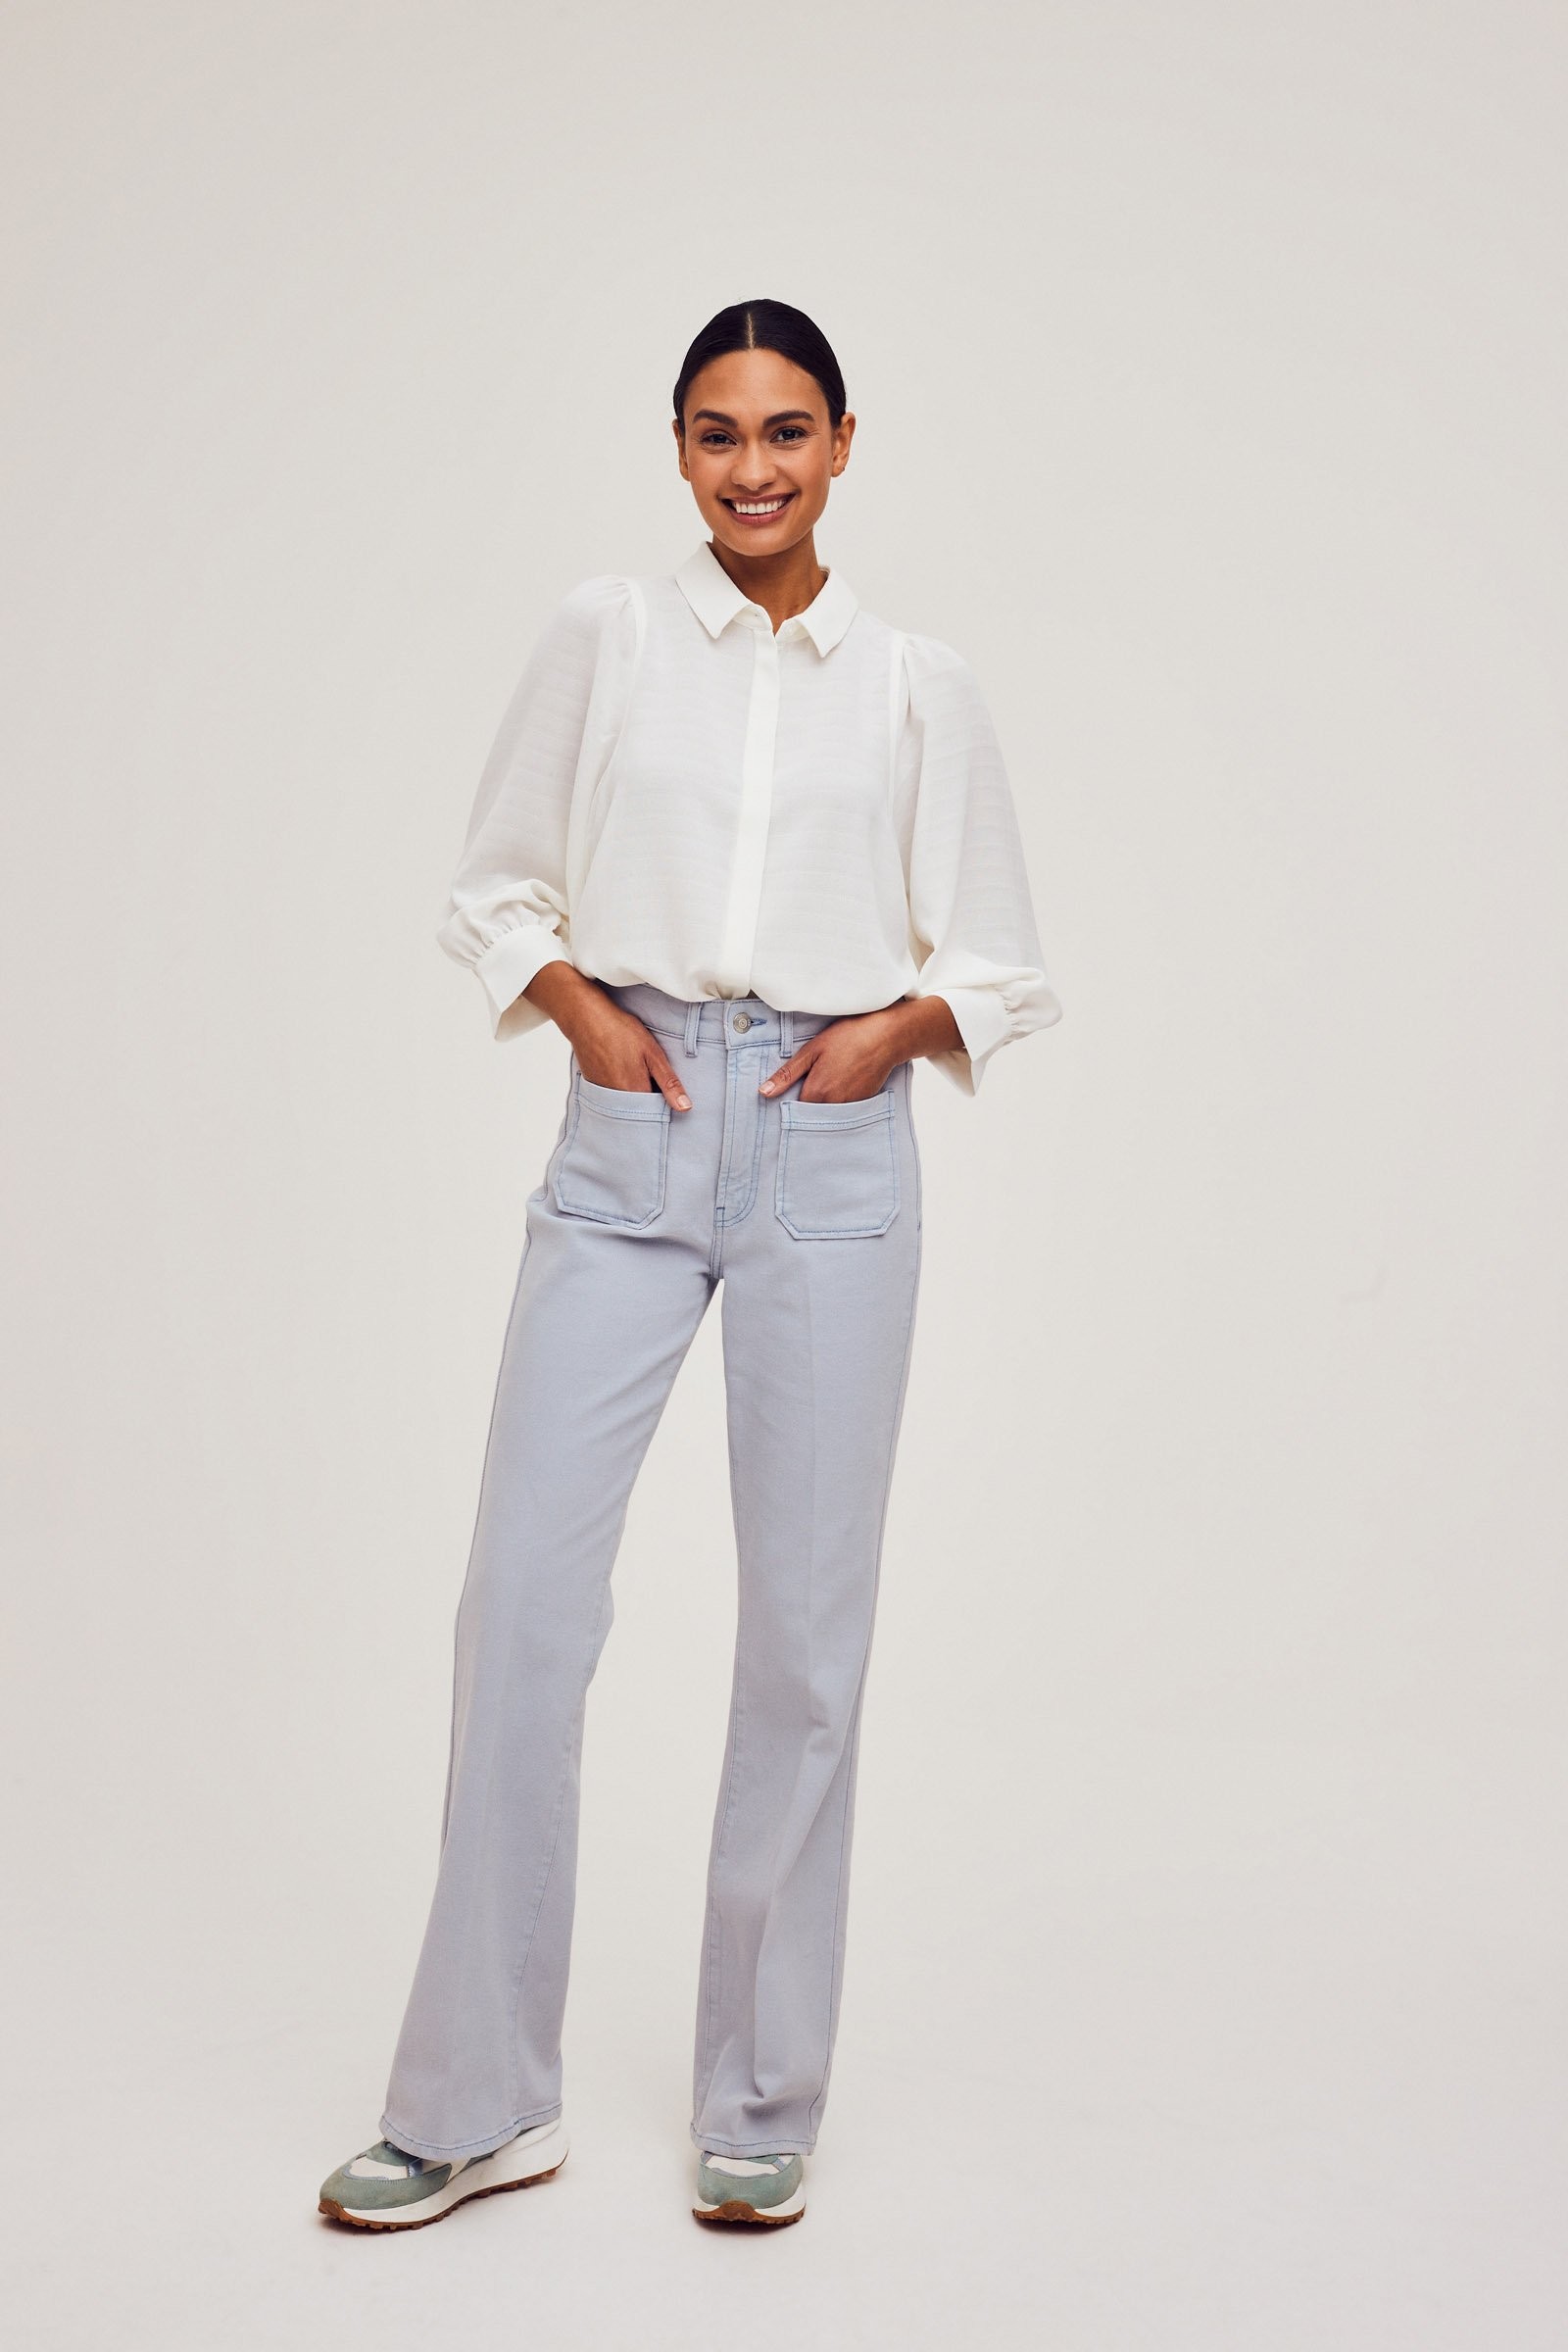 CKS Dames - ROSALINOS - blouse short sleeves - white